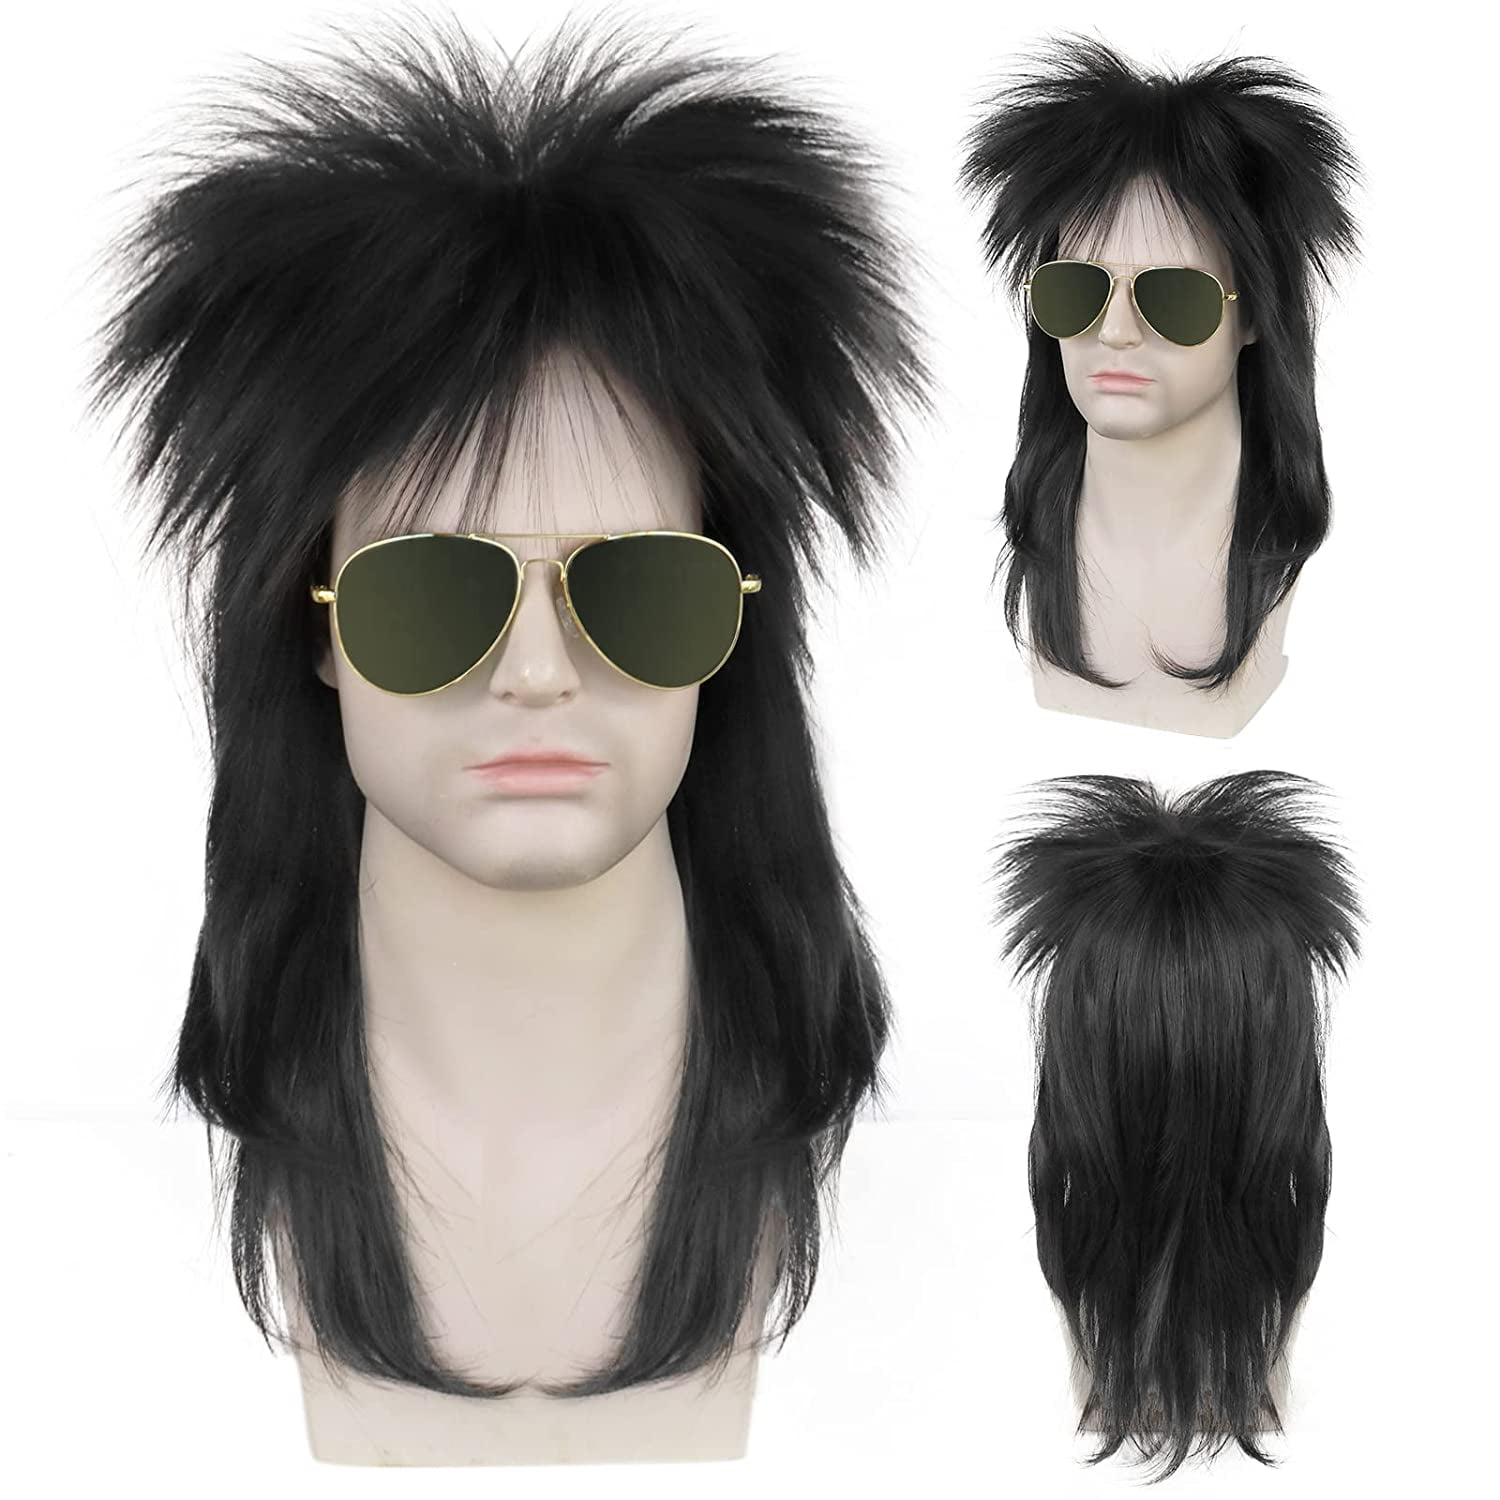 Red Mohawk Punk Rock Wig Rocker 70s 80s Black Rockstar Halloween Costume Hair OS 